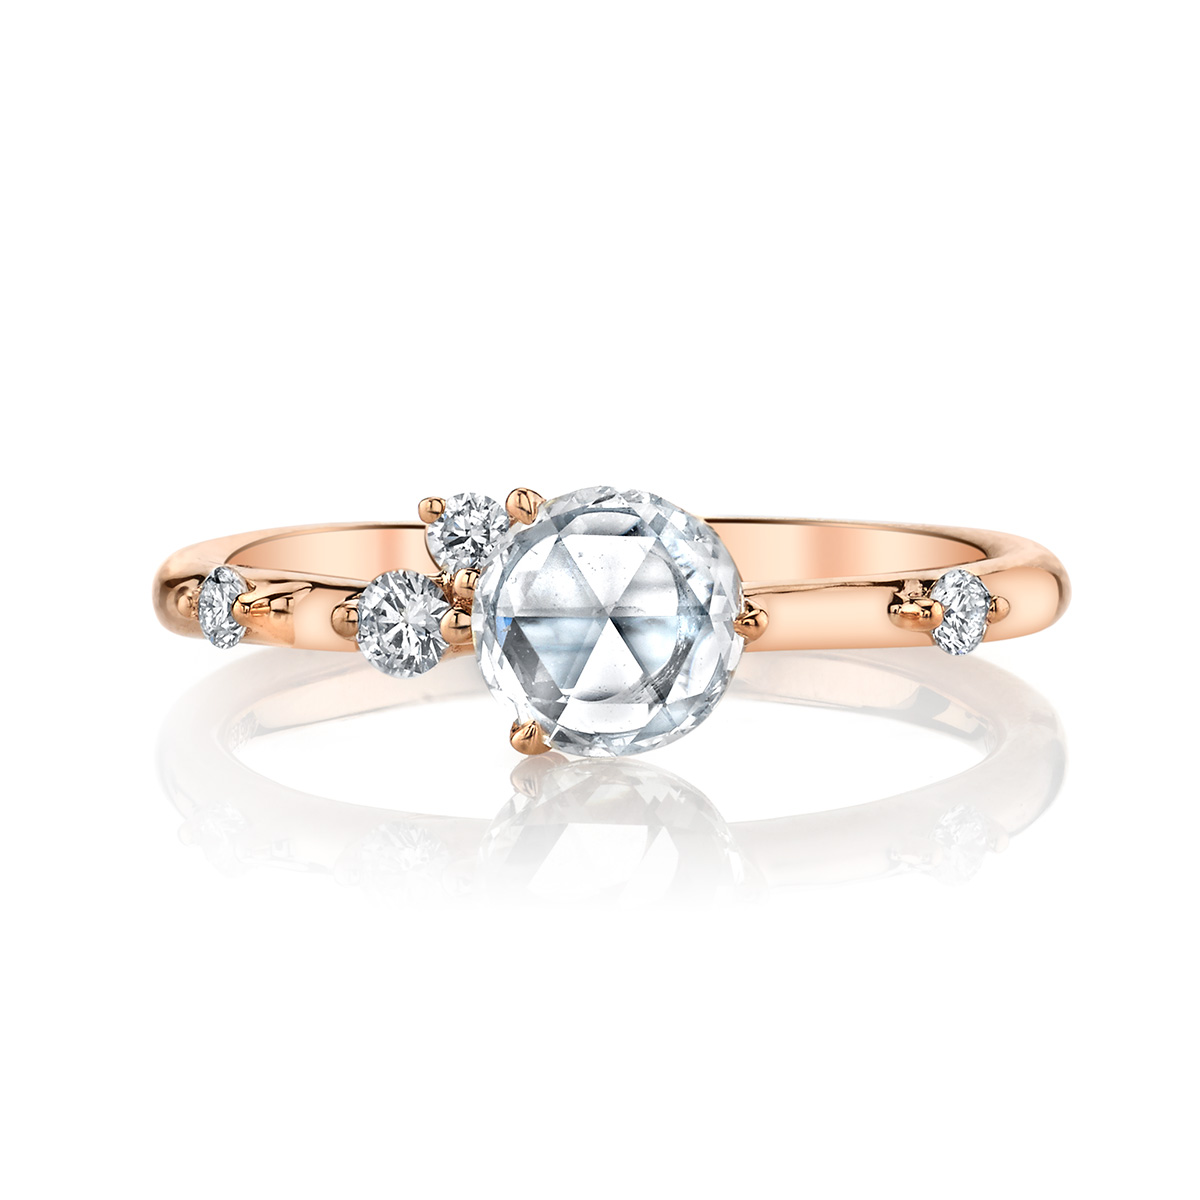 Designer diamond engagement ring with rose cut diamond by Parade Design.